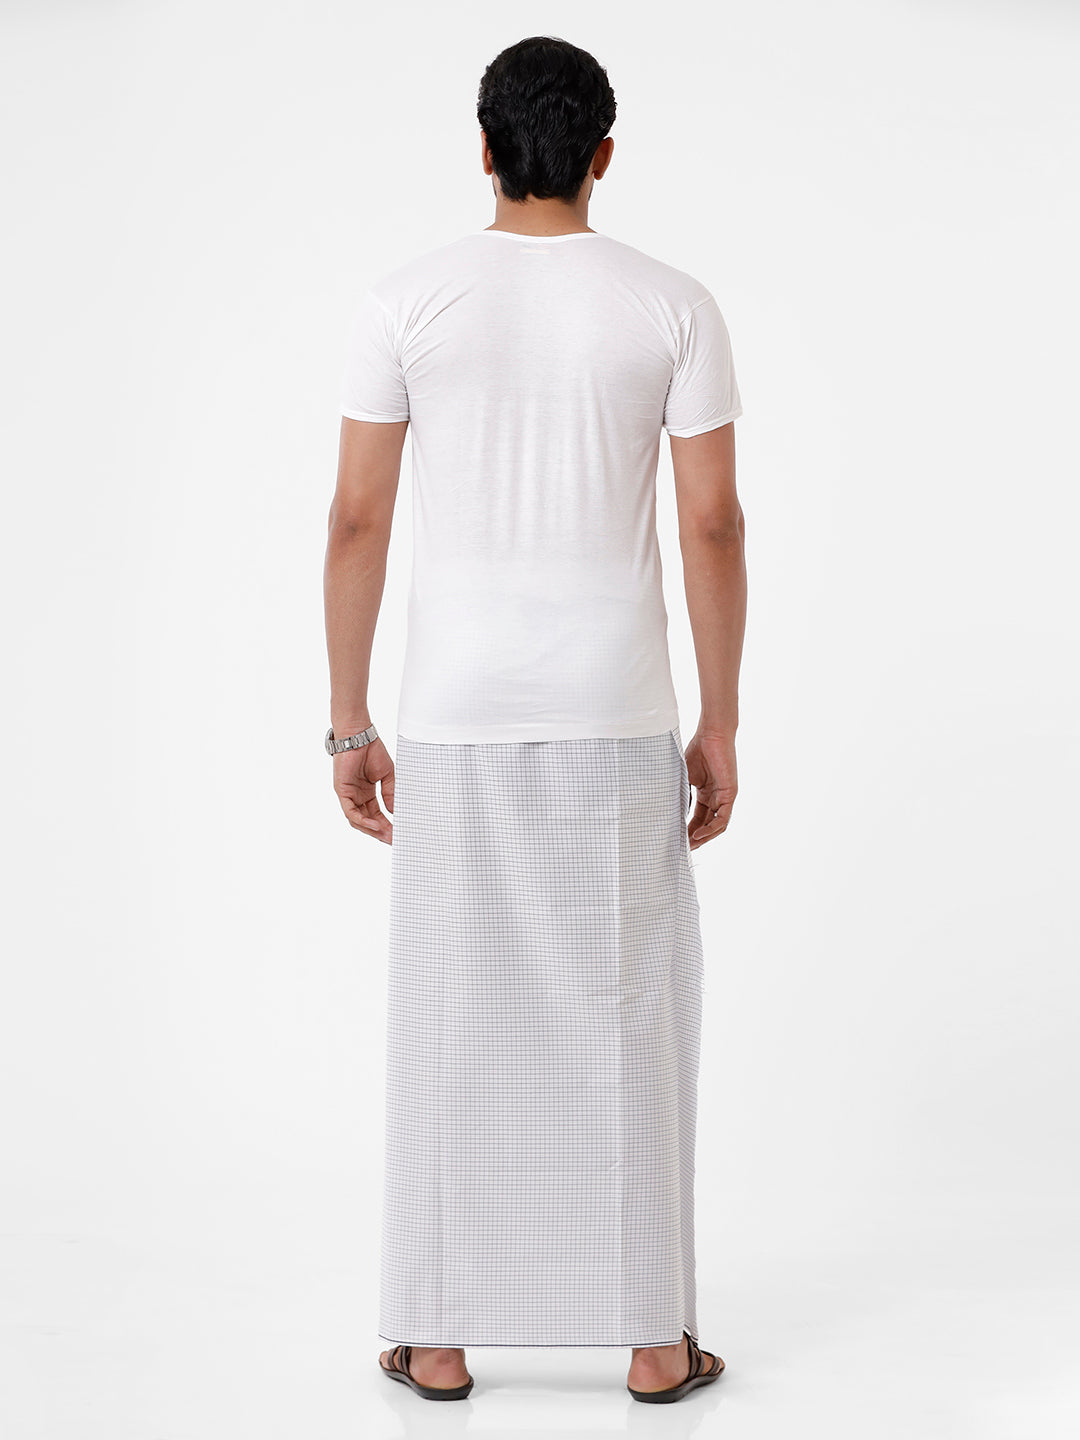 Mens Cotton Stitched Lungi Nexus-Back view